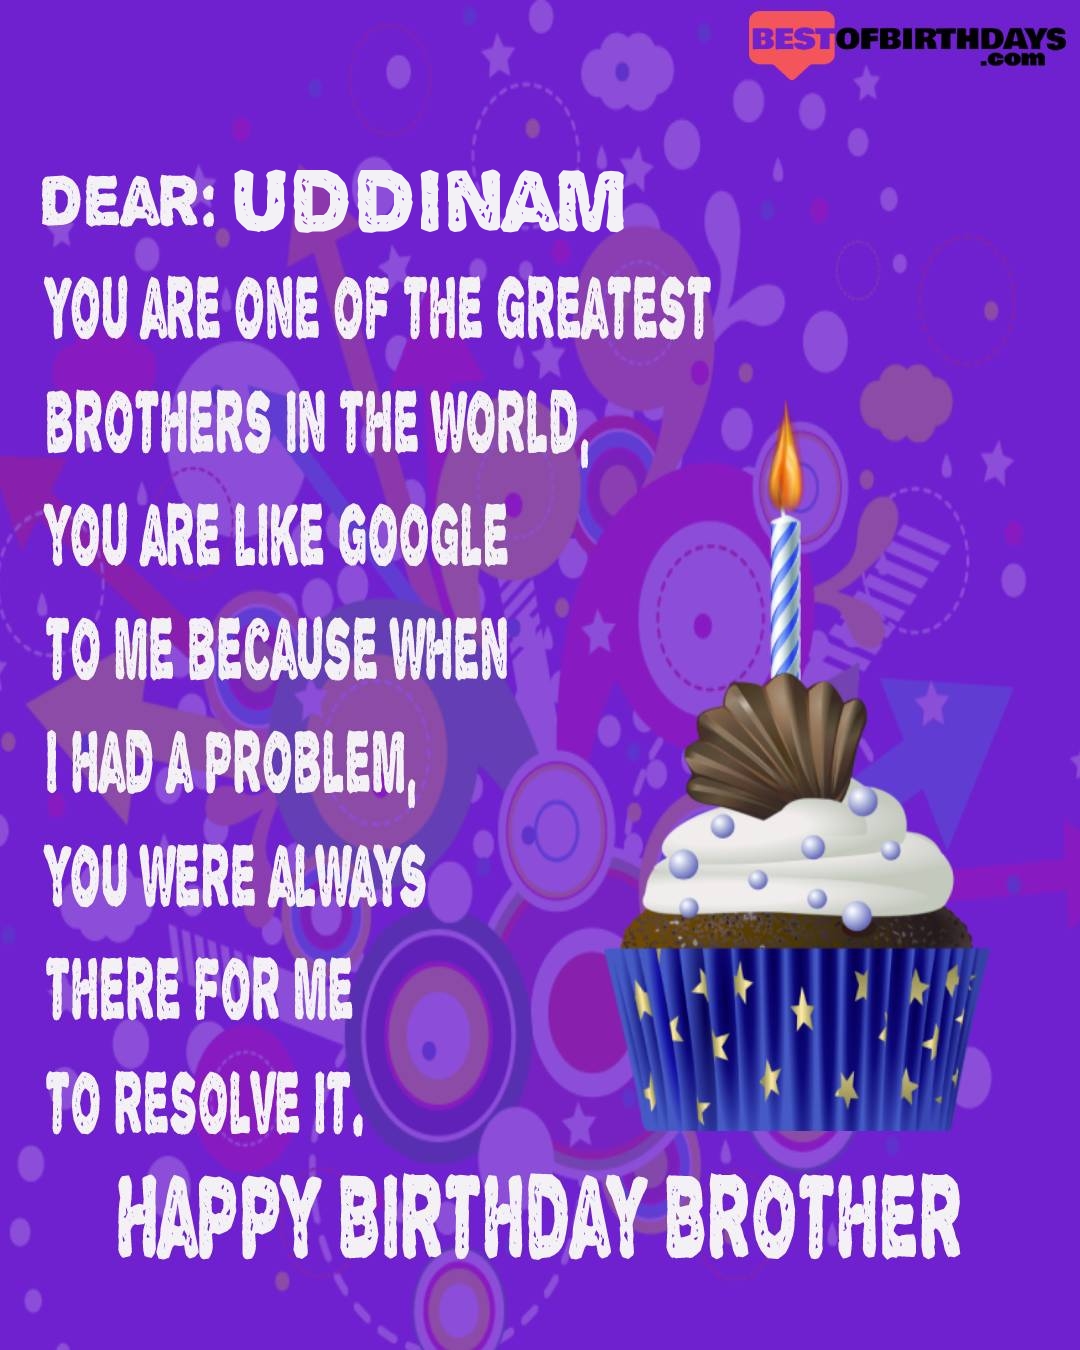 Happy birthday uddinam bhai brother bro